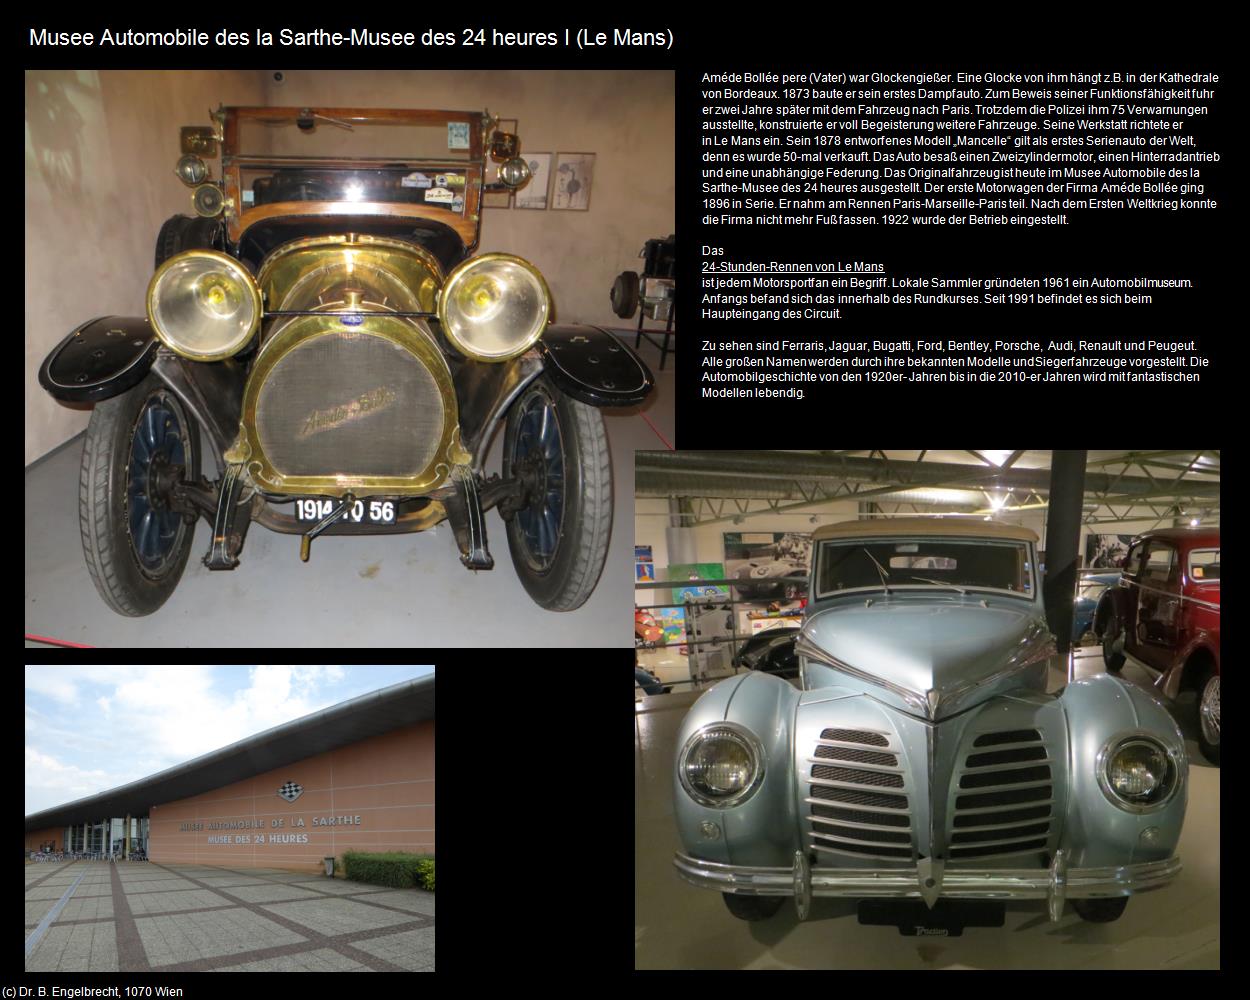 Musee Automobile des la Sarthe-Musee des 24 heures I (Le Mans (FR-PDL)) in Kulturatlas-FRANKREICH(c)B.Engelbrecht